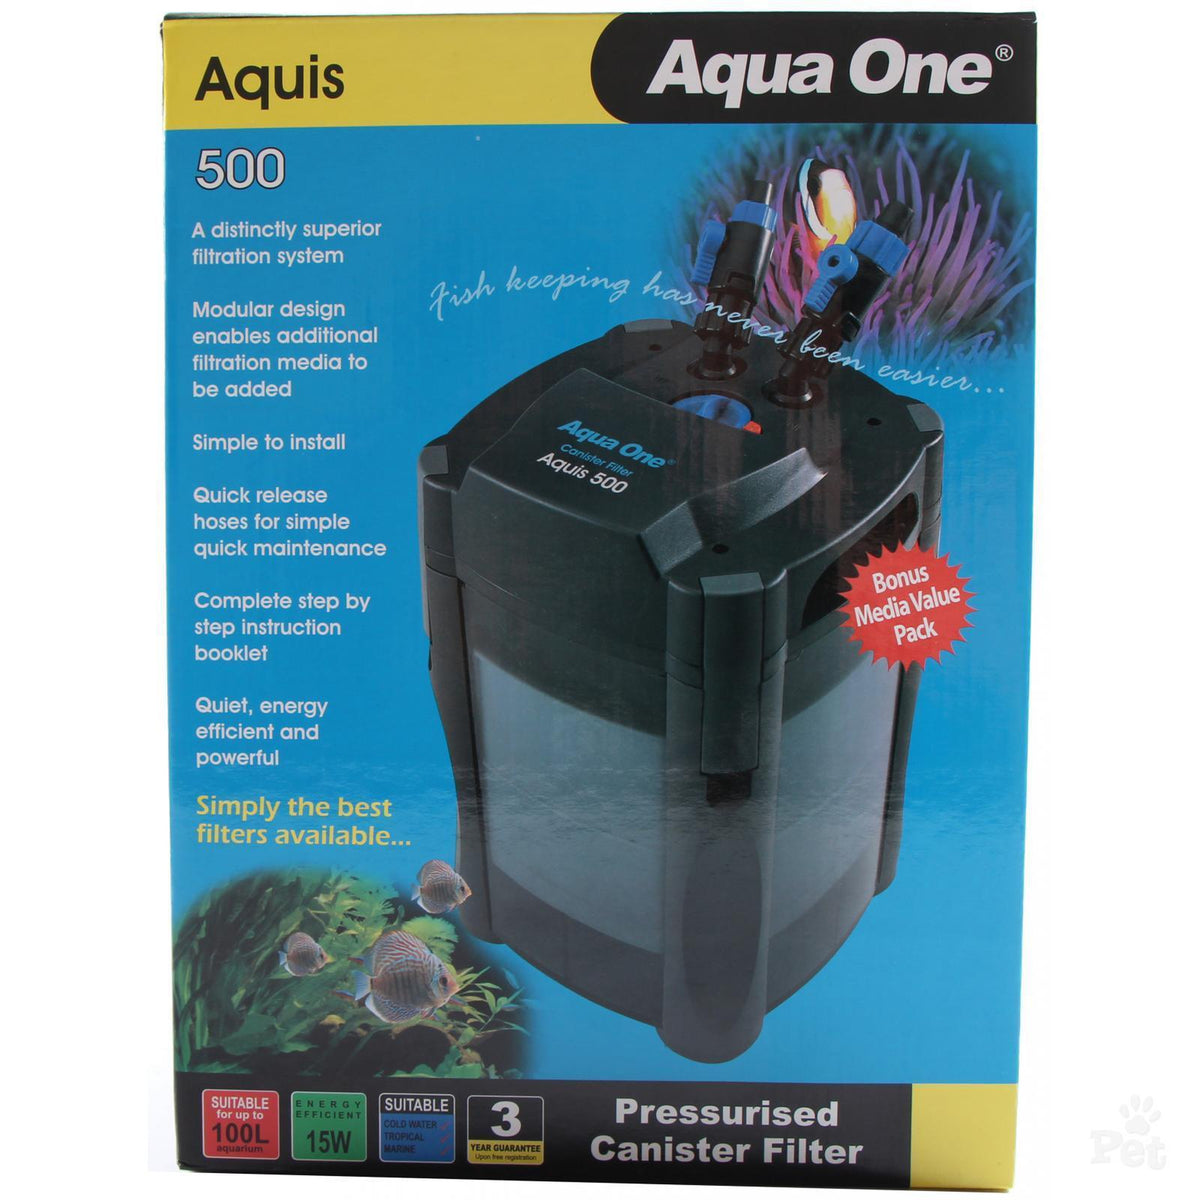 Aqua One Aquis CF Canister Filter Range